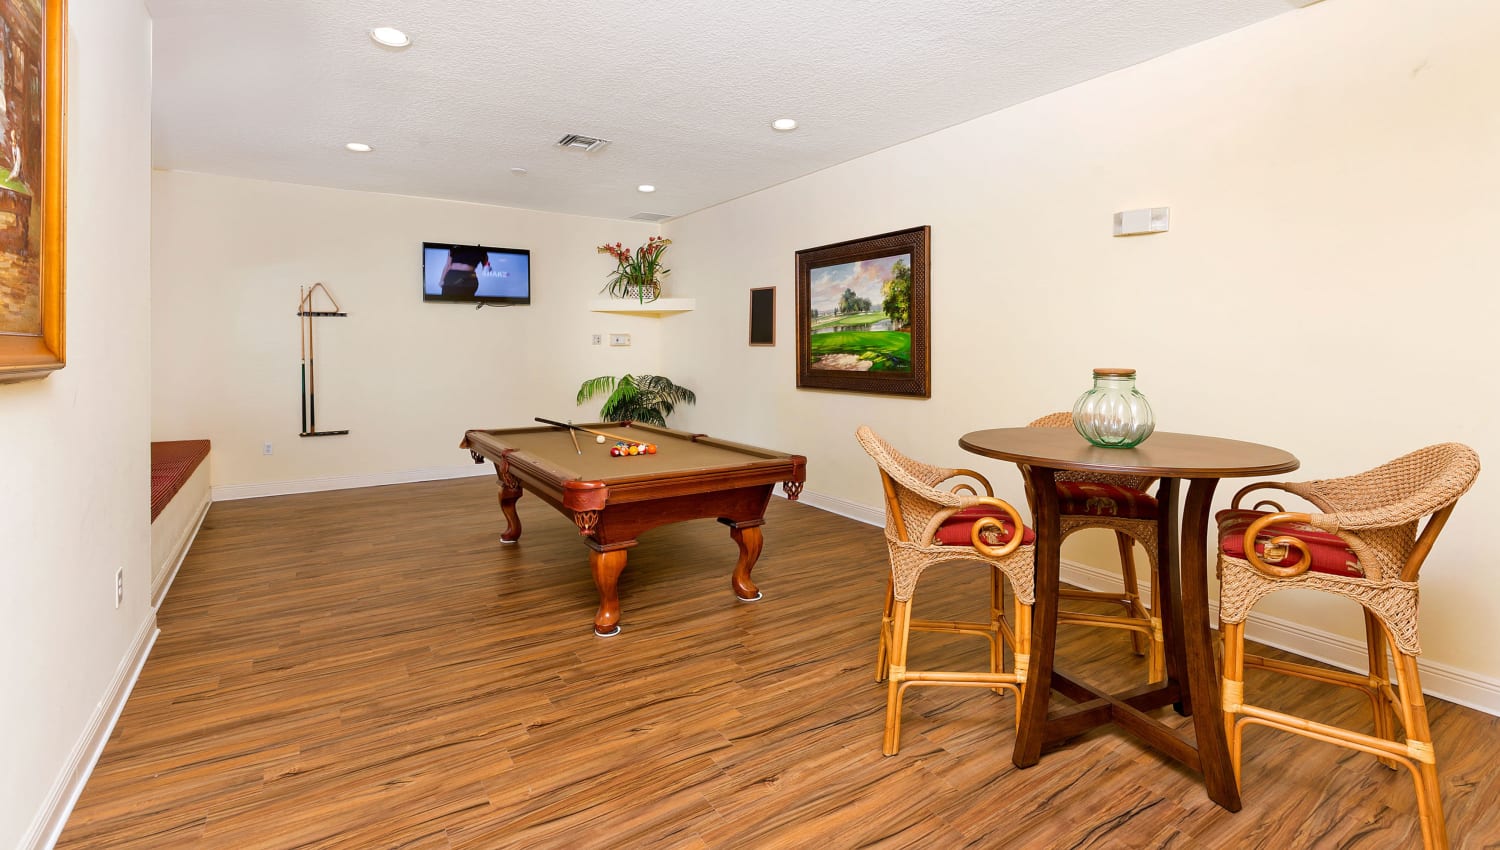 Billiards room at Quantum Lake Villas Apartments in Boynton Beach, Florida